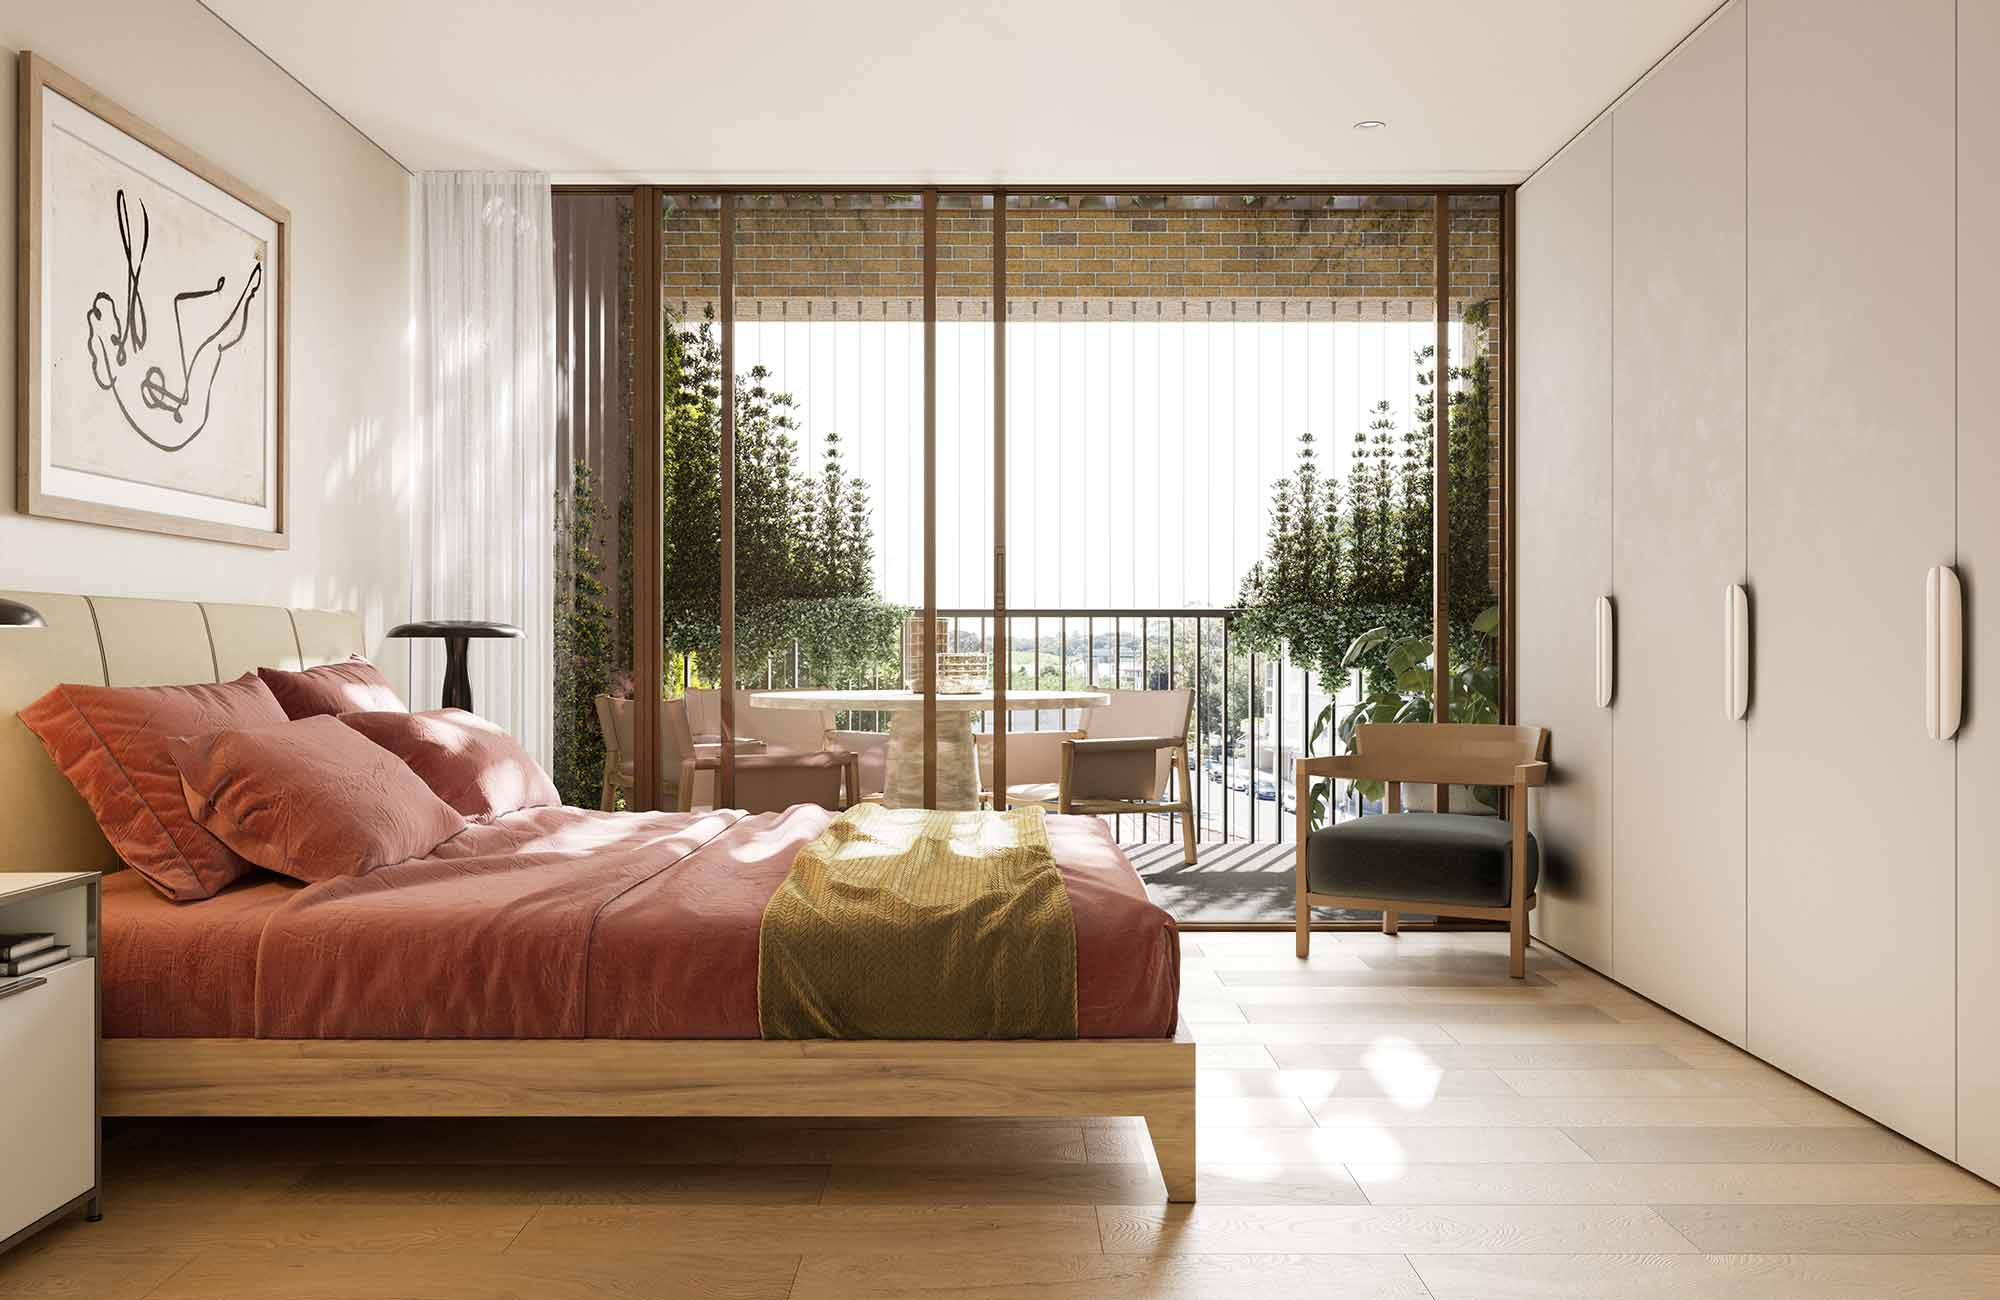 Luxury Bedroom - The Kensington